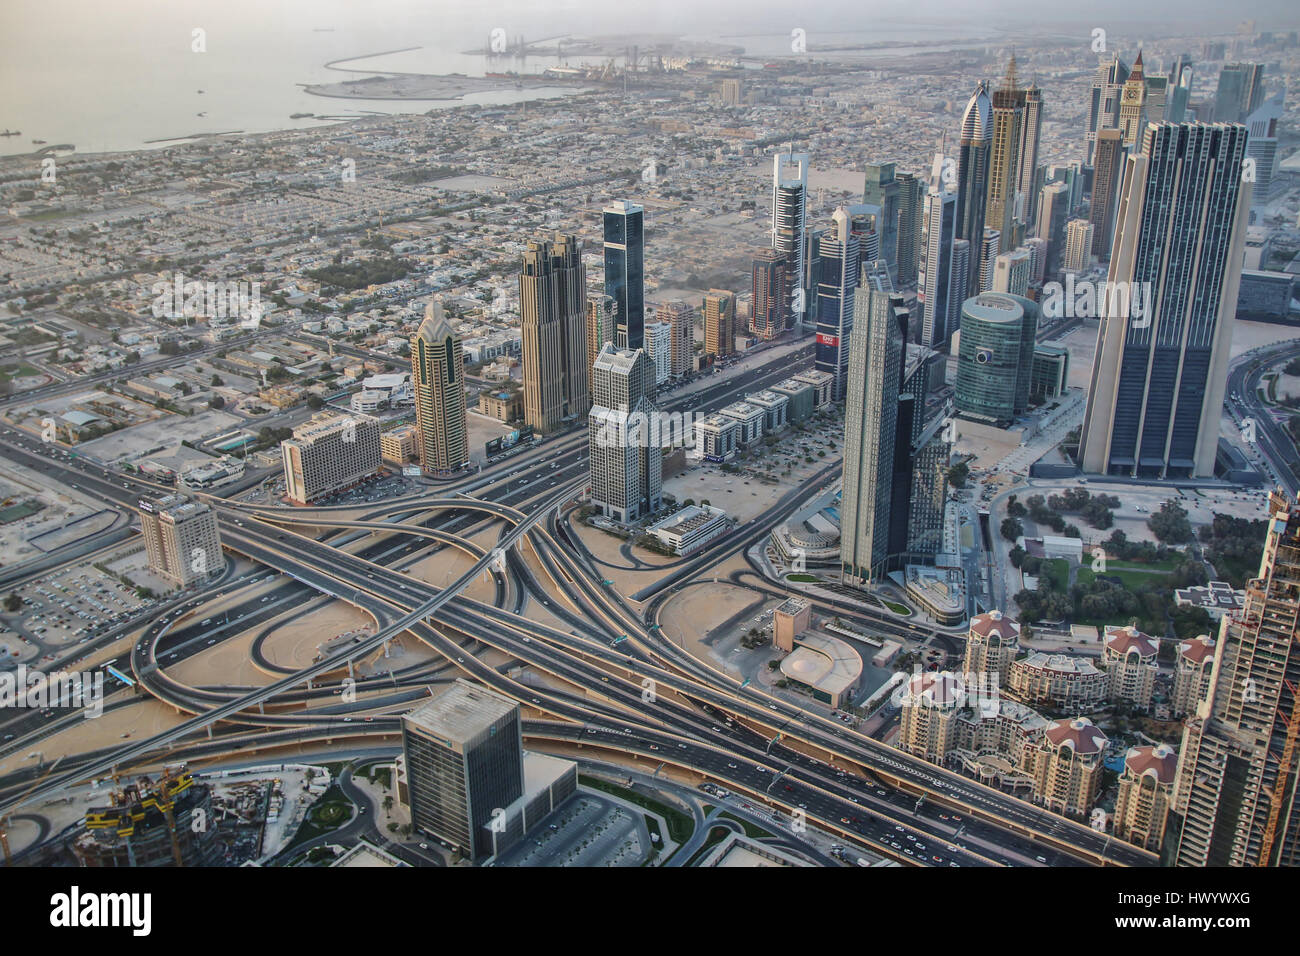 Dubai Burj Khalifa Entrance High Resolution Stock Photography and Images -  Alamy